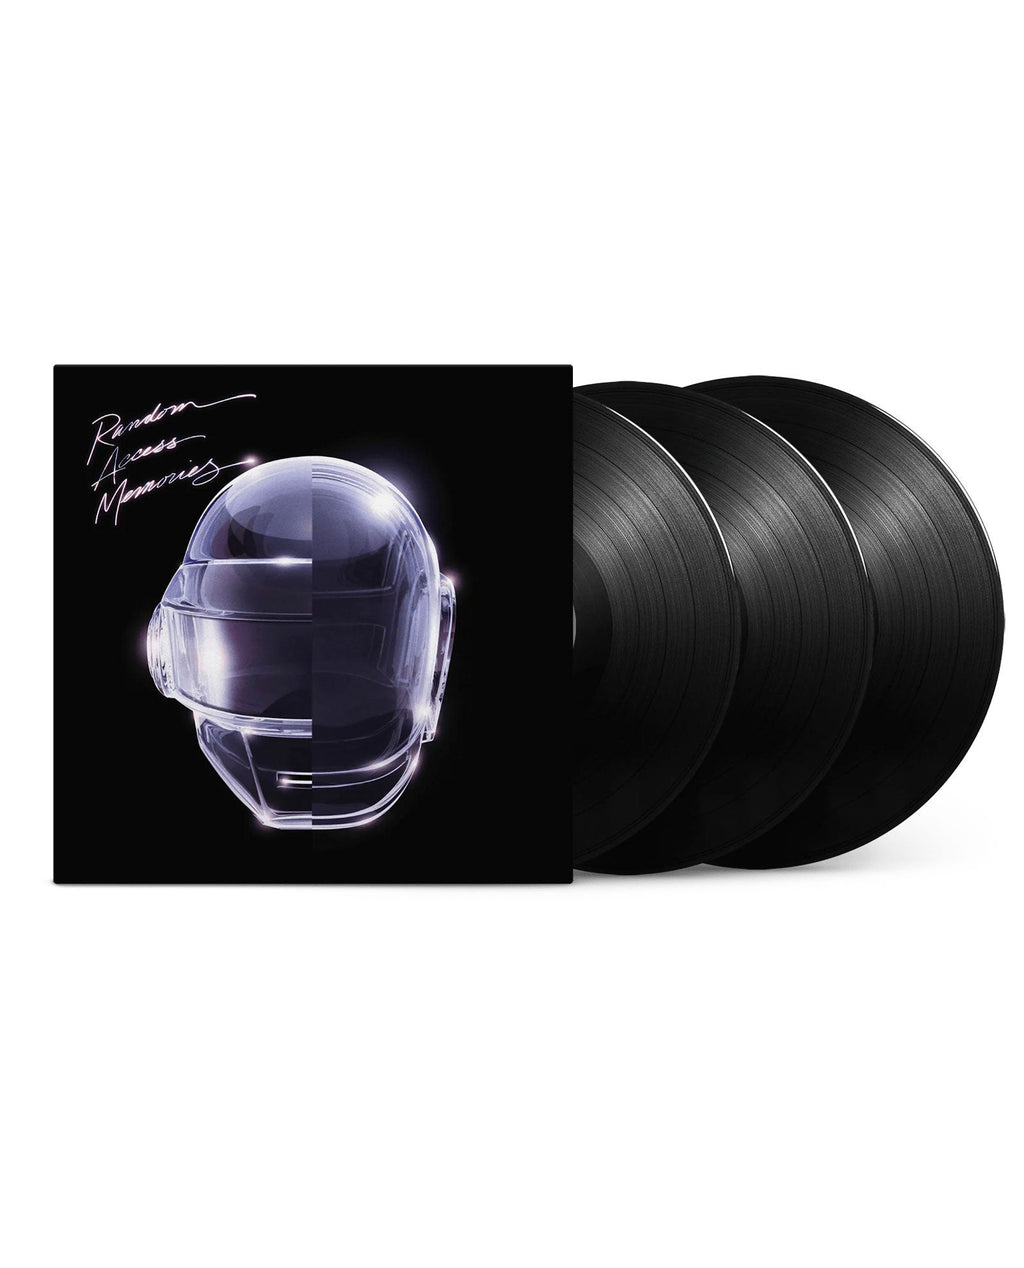 Random Access Memories 10th Anniversary Edition 3 Lps Vinyl Daft Punk en  SMFSTORE